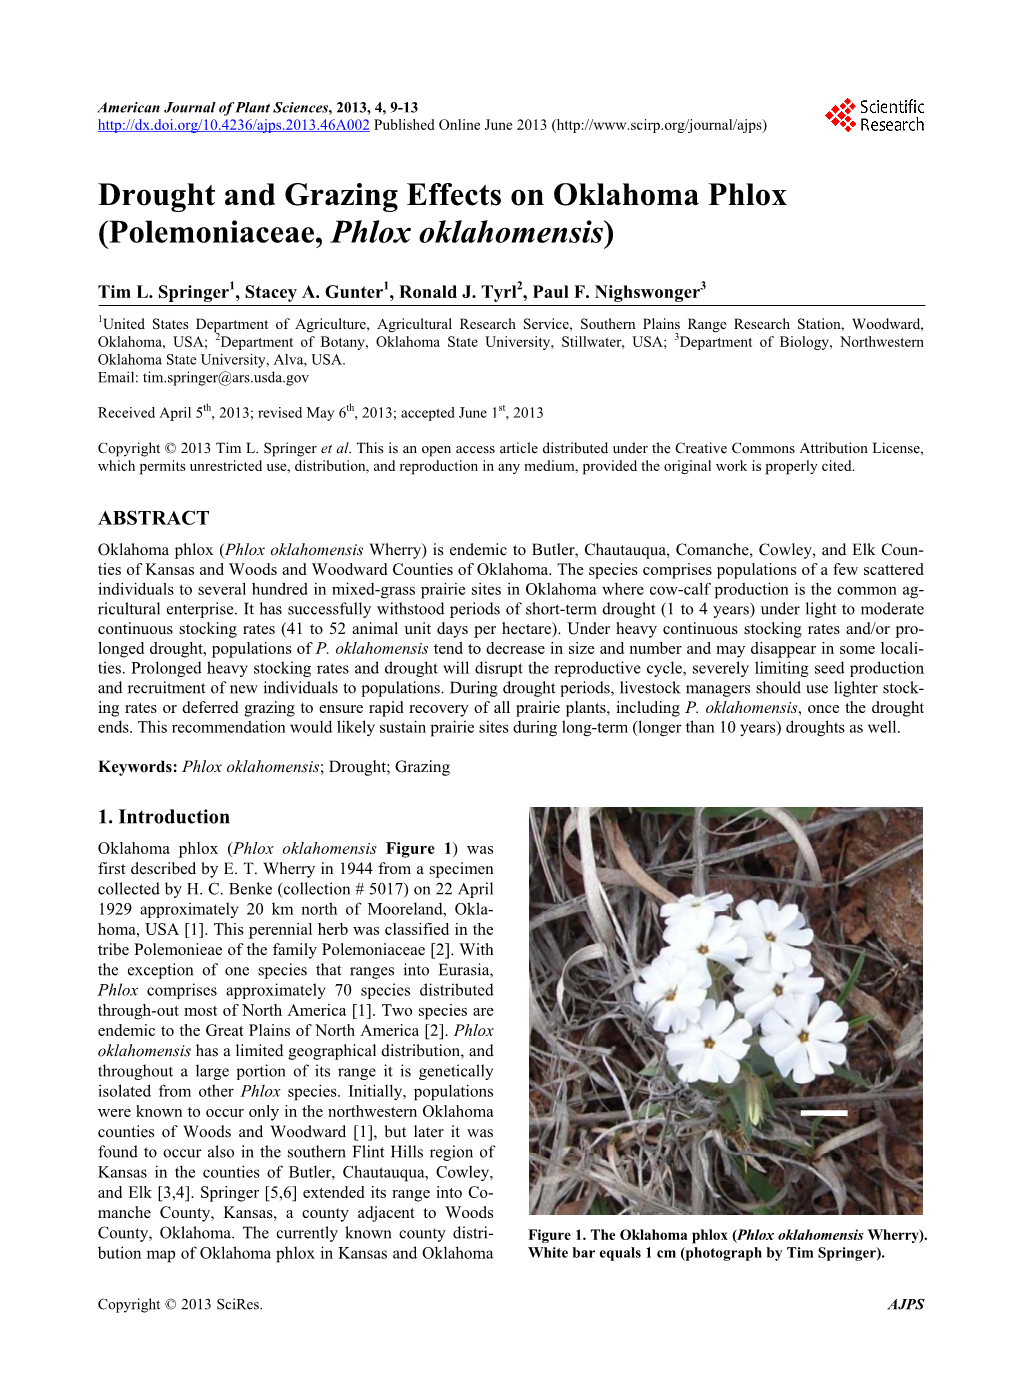 Drought and Grazing Effects on Oklahoma Phlox (Polemoniaceae, Phlox Oklahomensis)